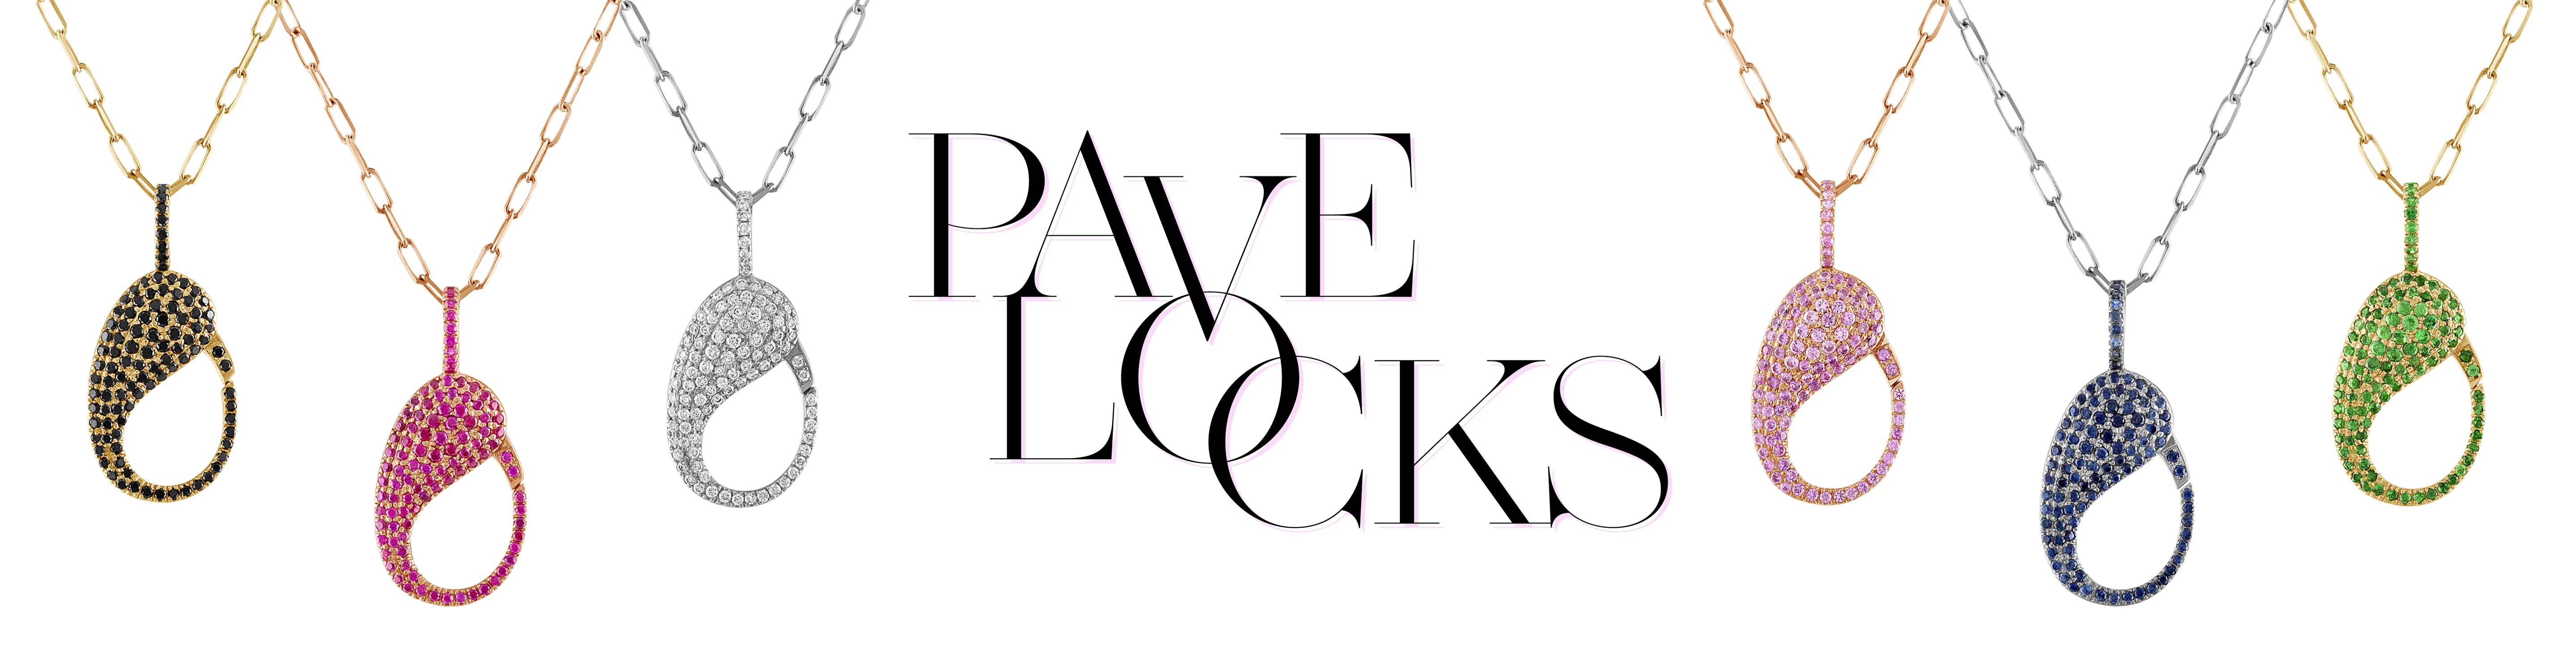 Pave Locks